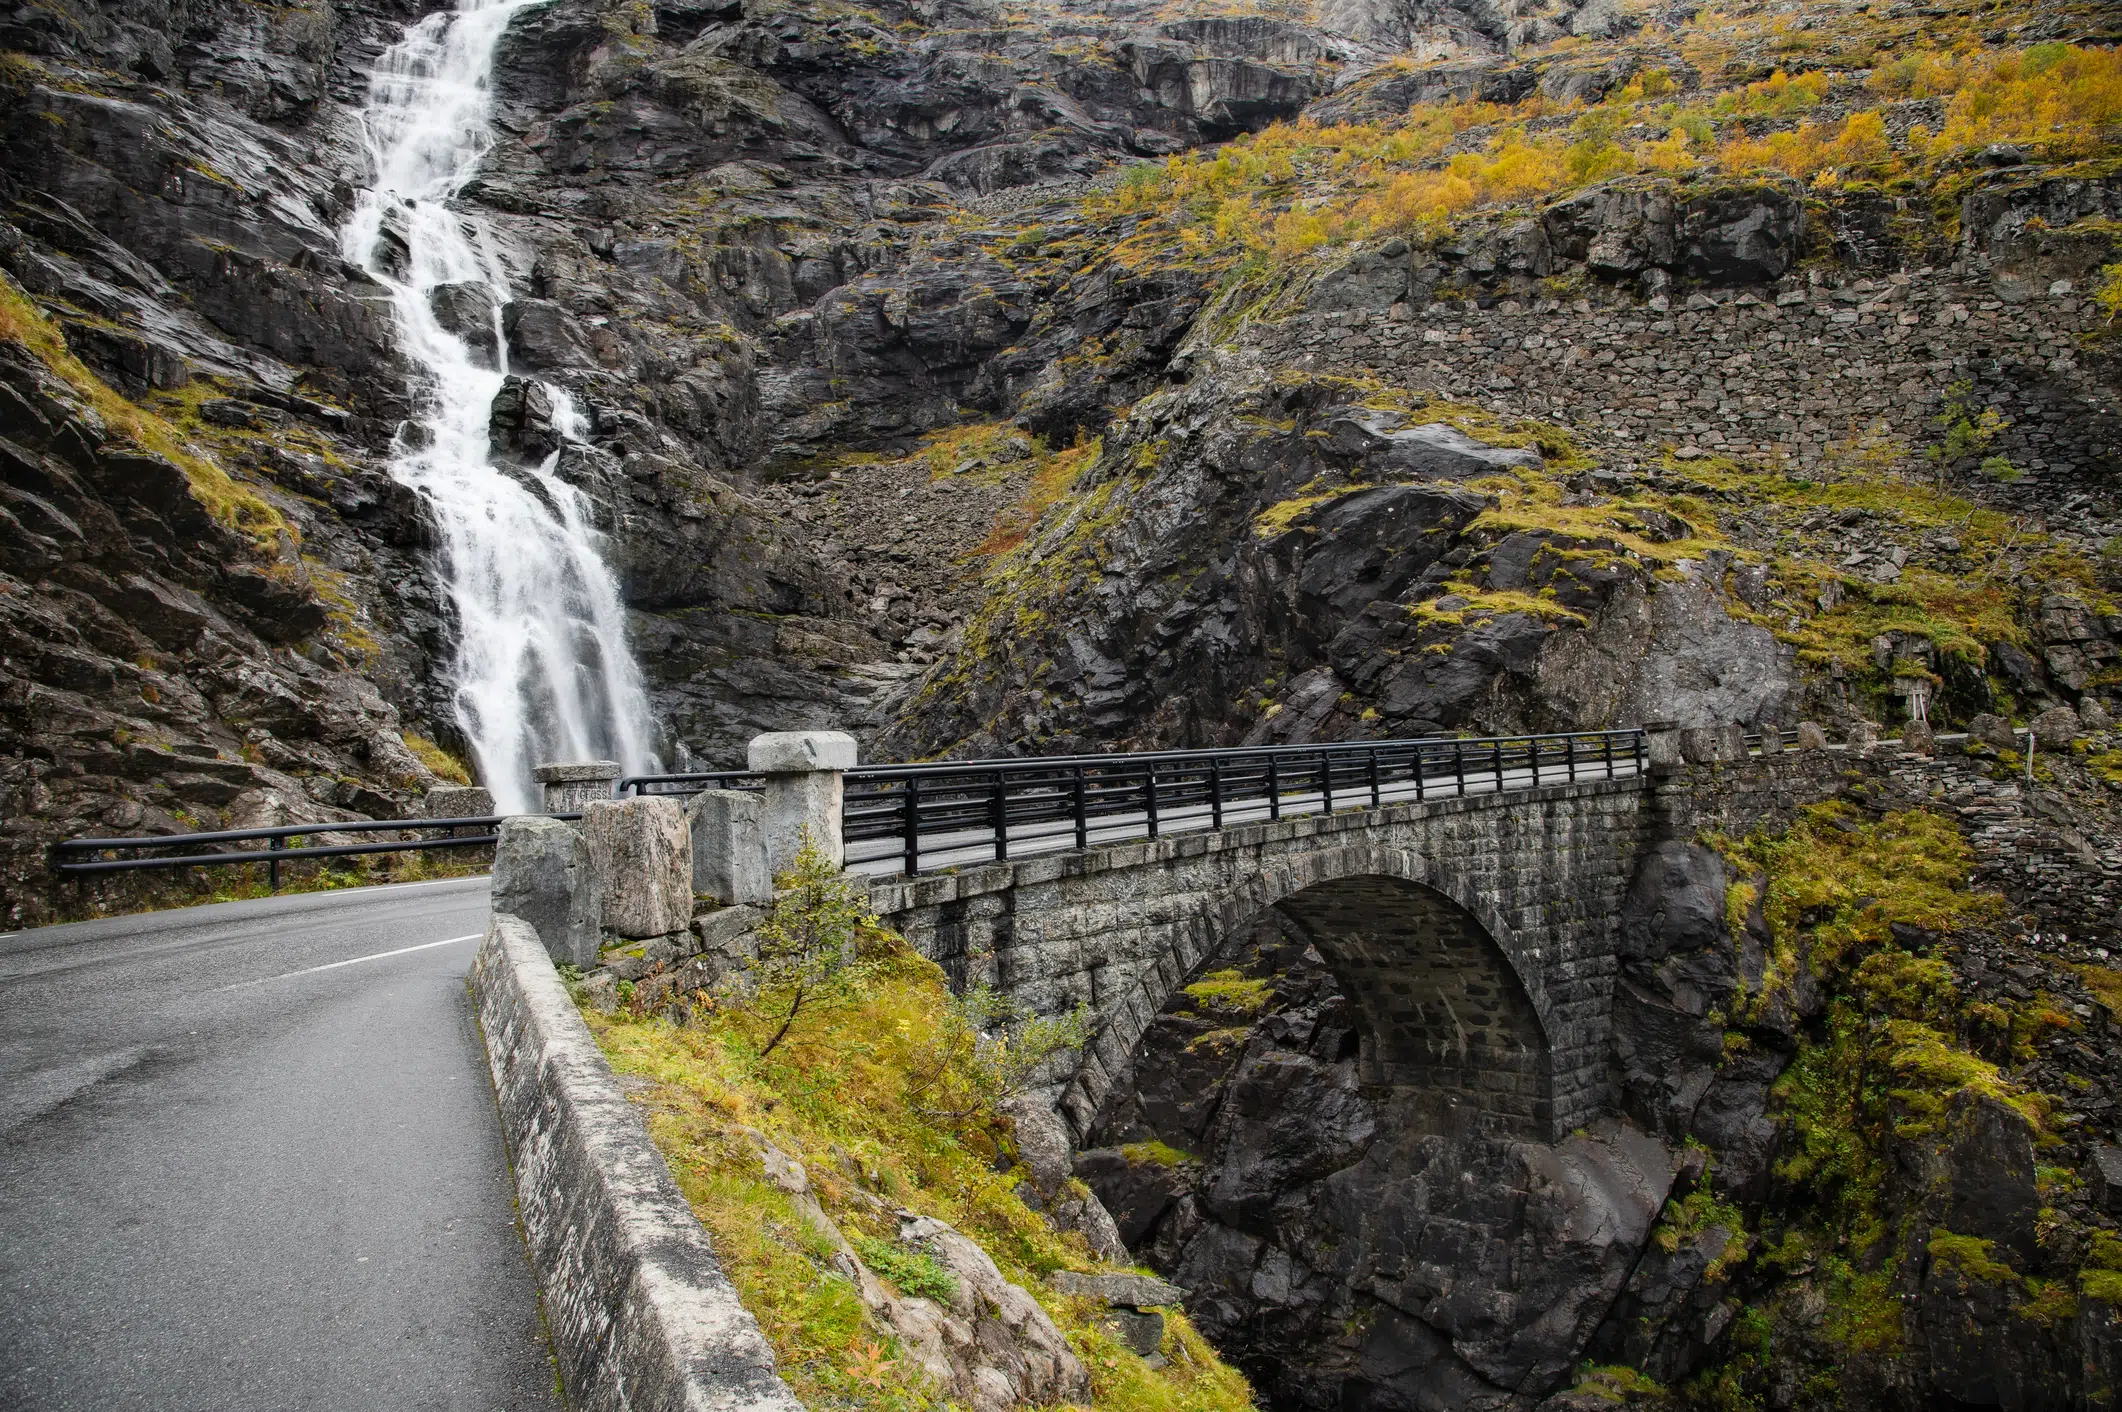 Bridge over Stigfossen waterfall, Trollstigen mountain road, Raum, Vestland, Norway.